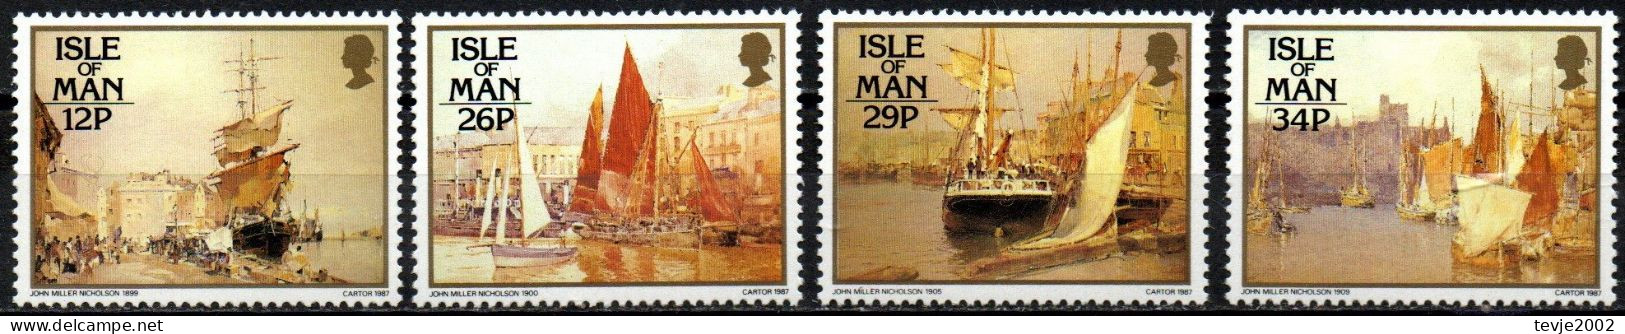 Isle Of Man 1987 - Mi.Nr. 331 - 334 - Postfrisch MNH - Segelschiffe Sailing Ships Gemälde Paintings - Isola Di Man